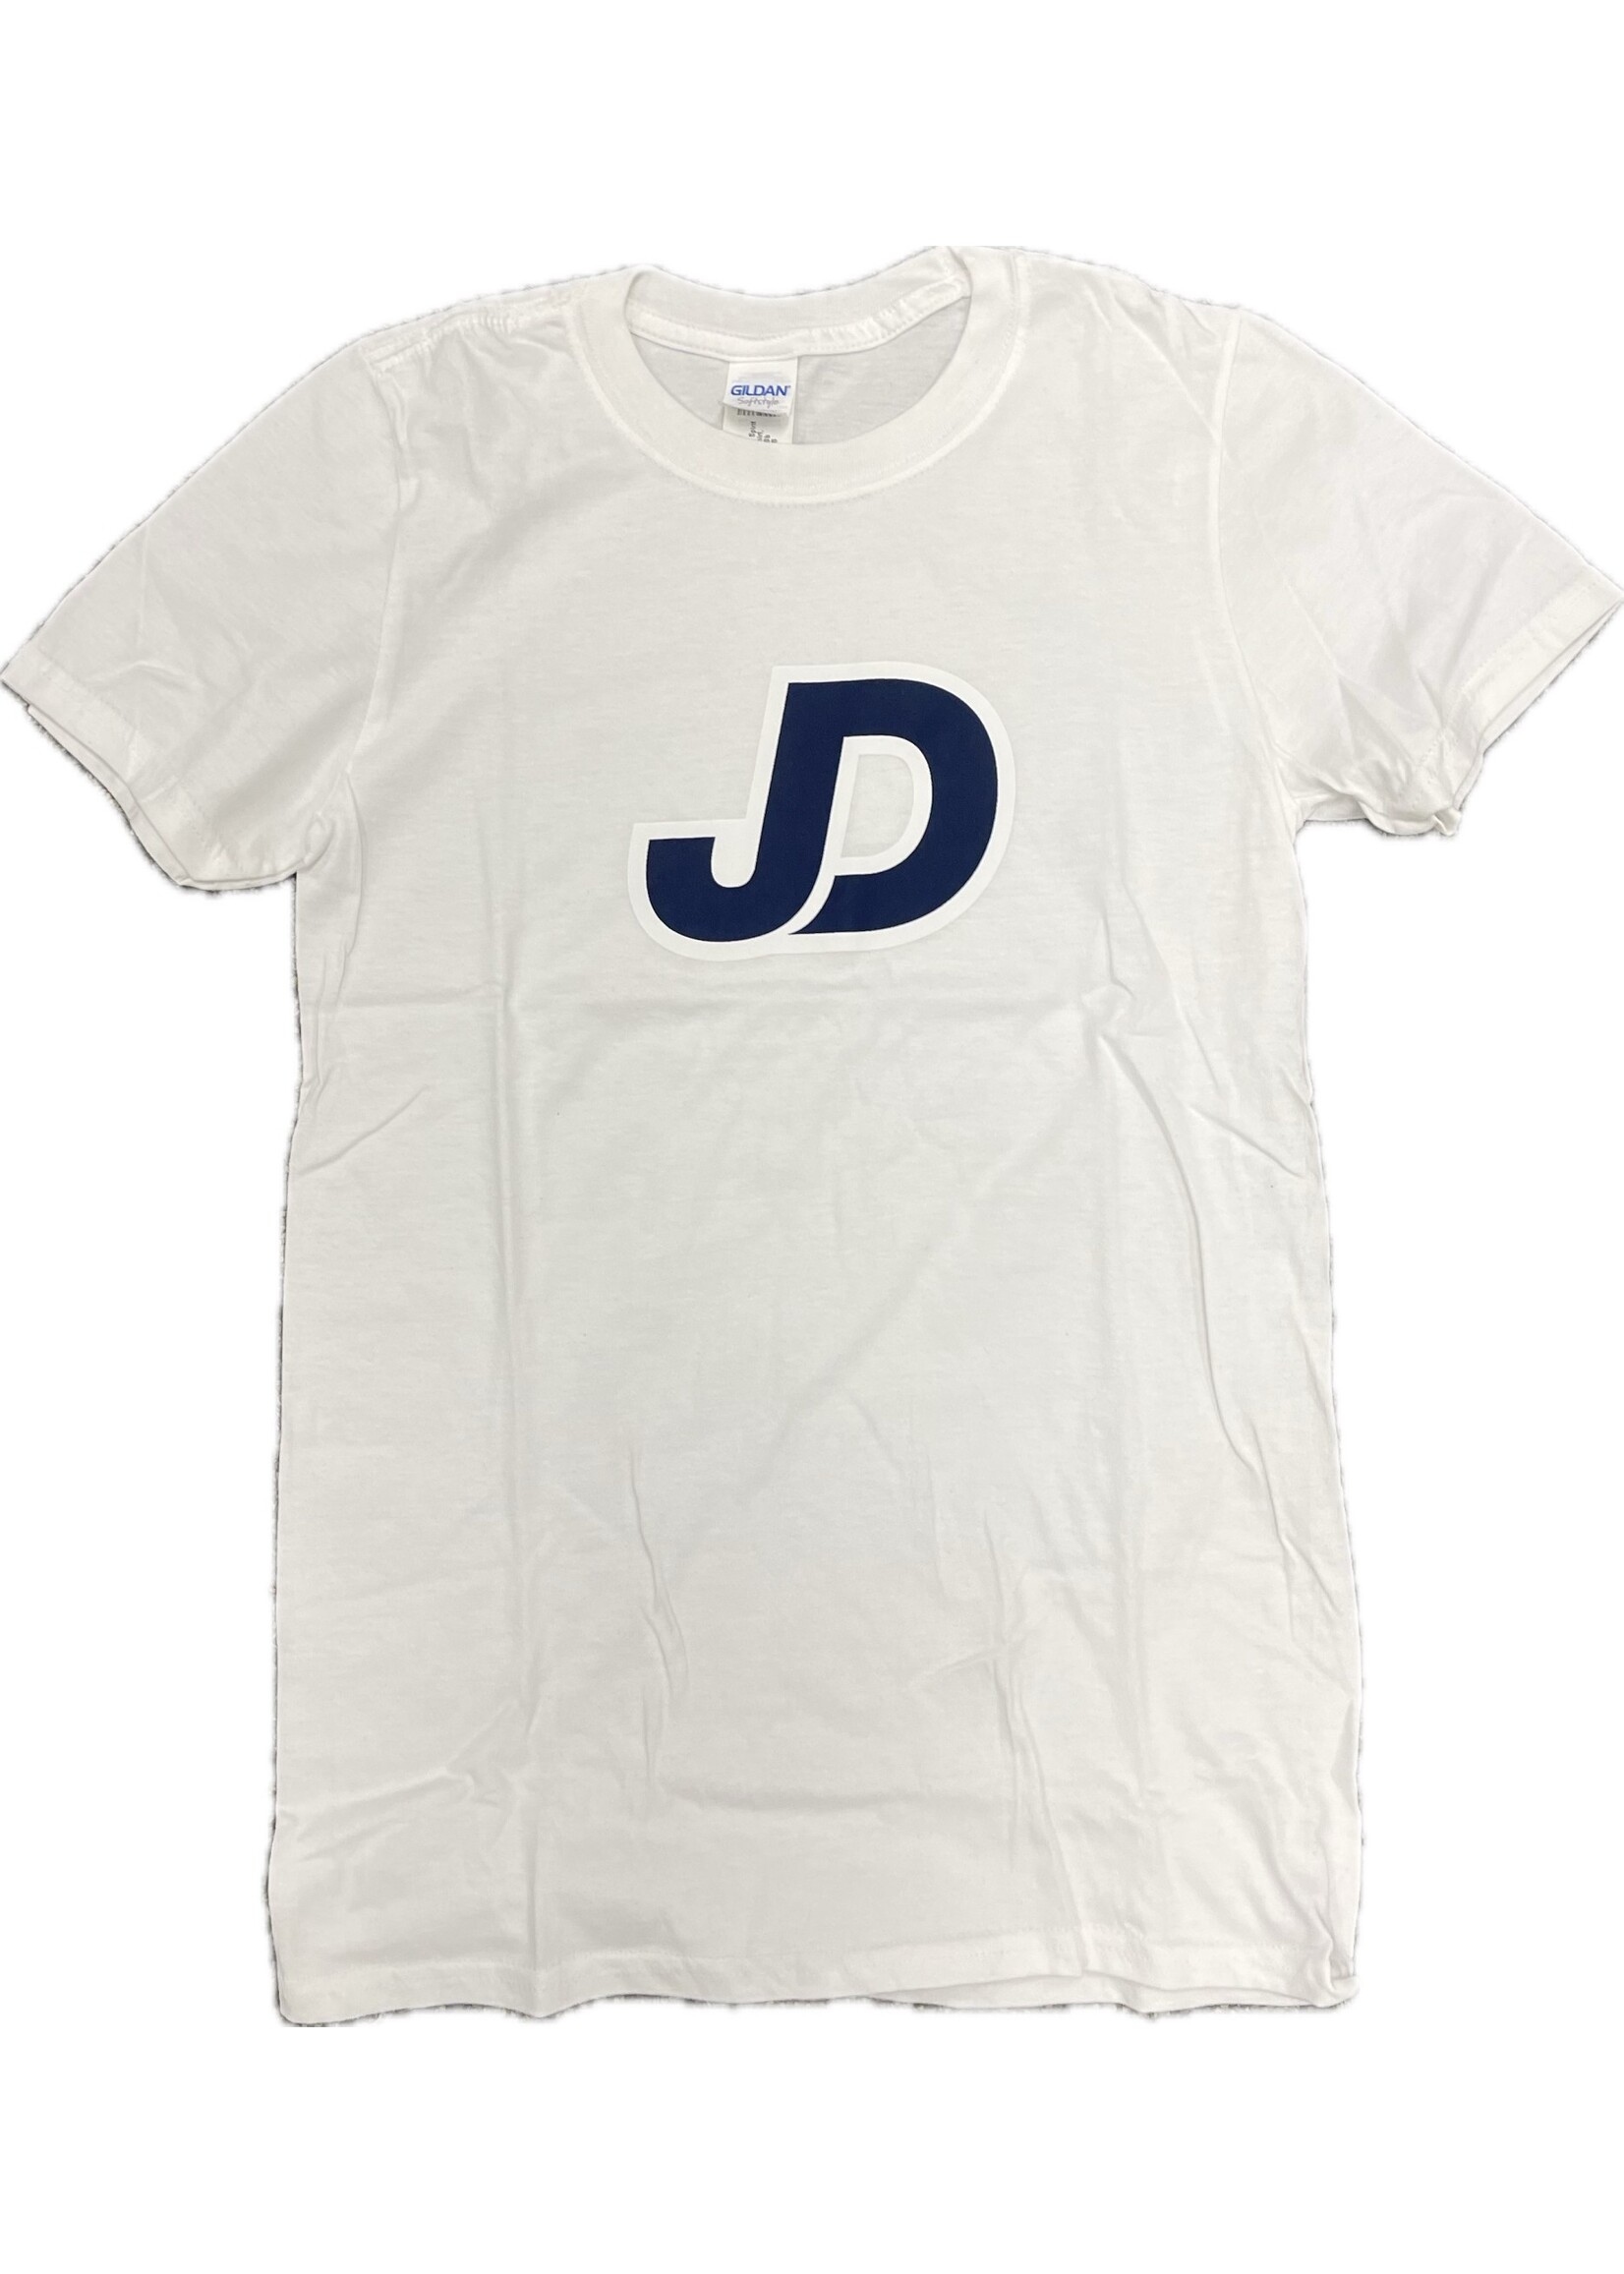 NON-UNIFORM JD - Spirit Shirt, Unisex